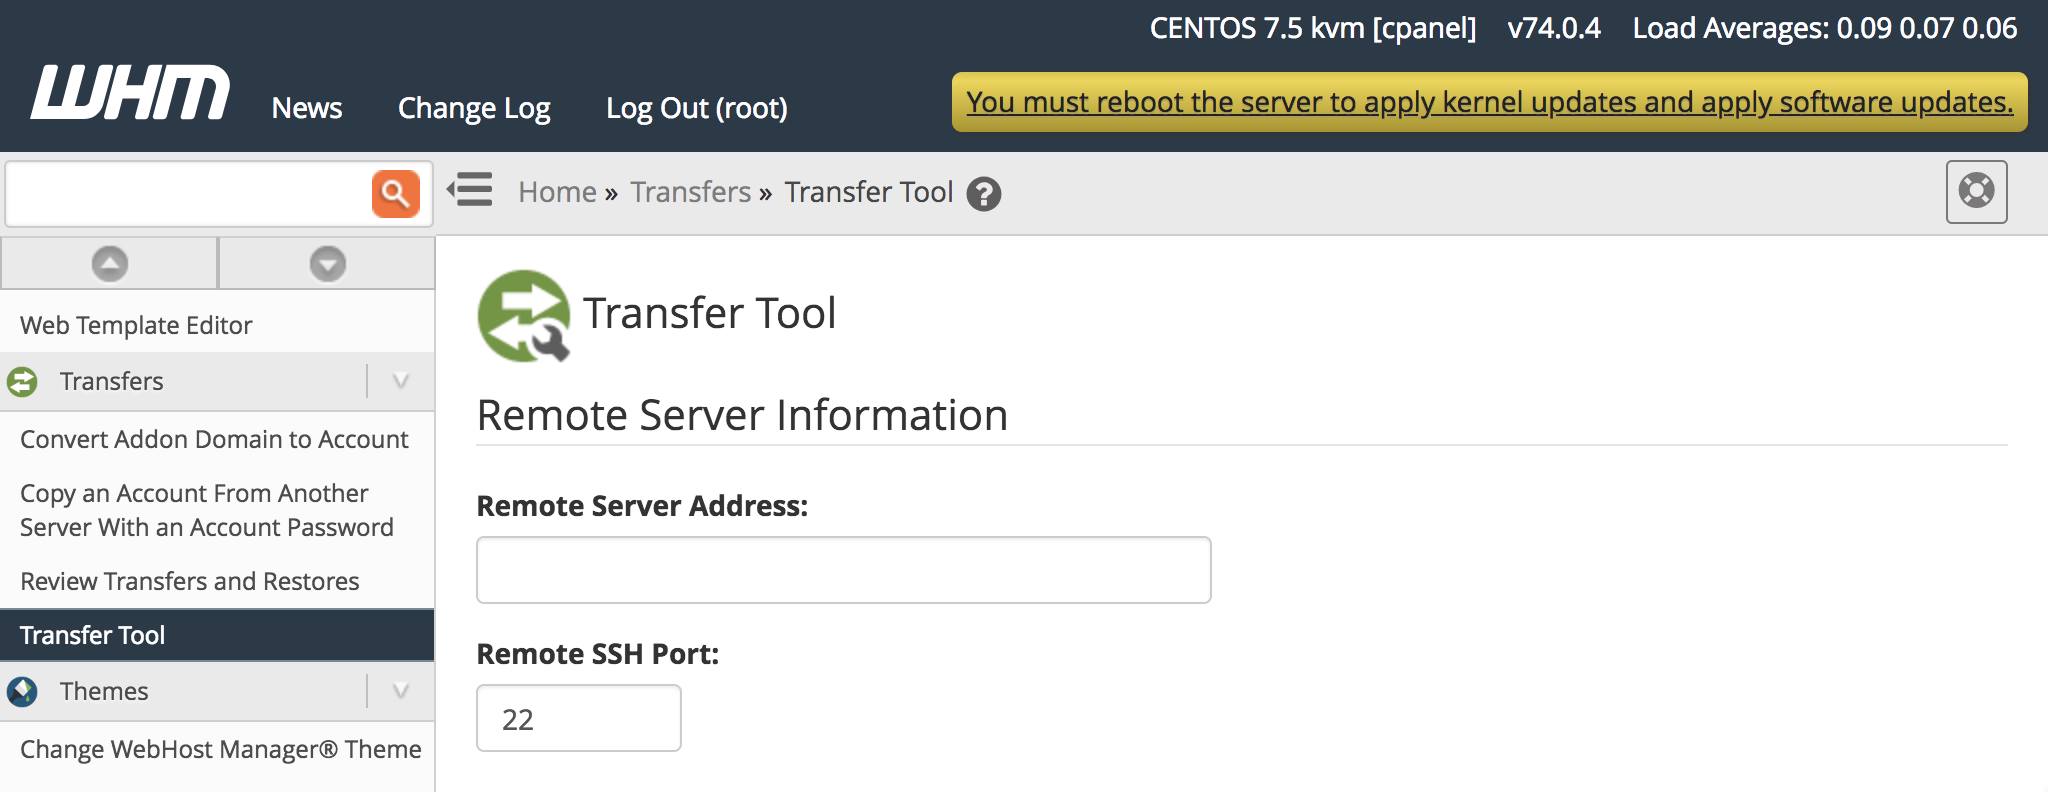 WHM Transfer Tool Remote Server Information Form